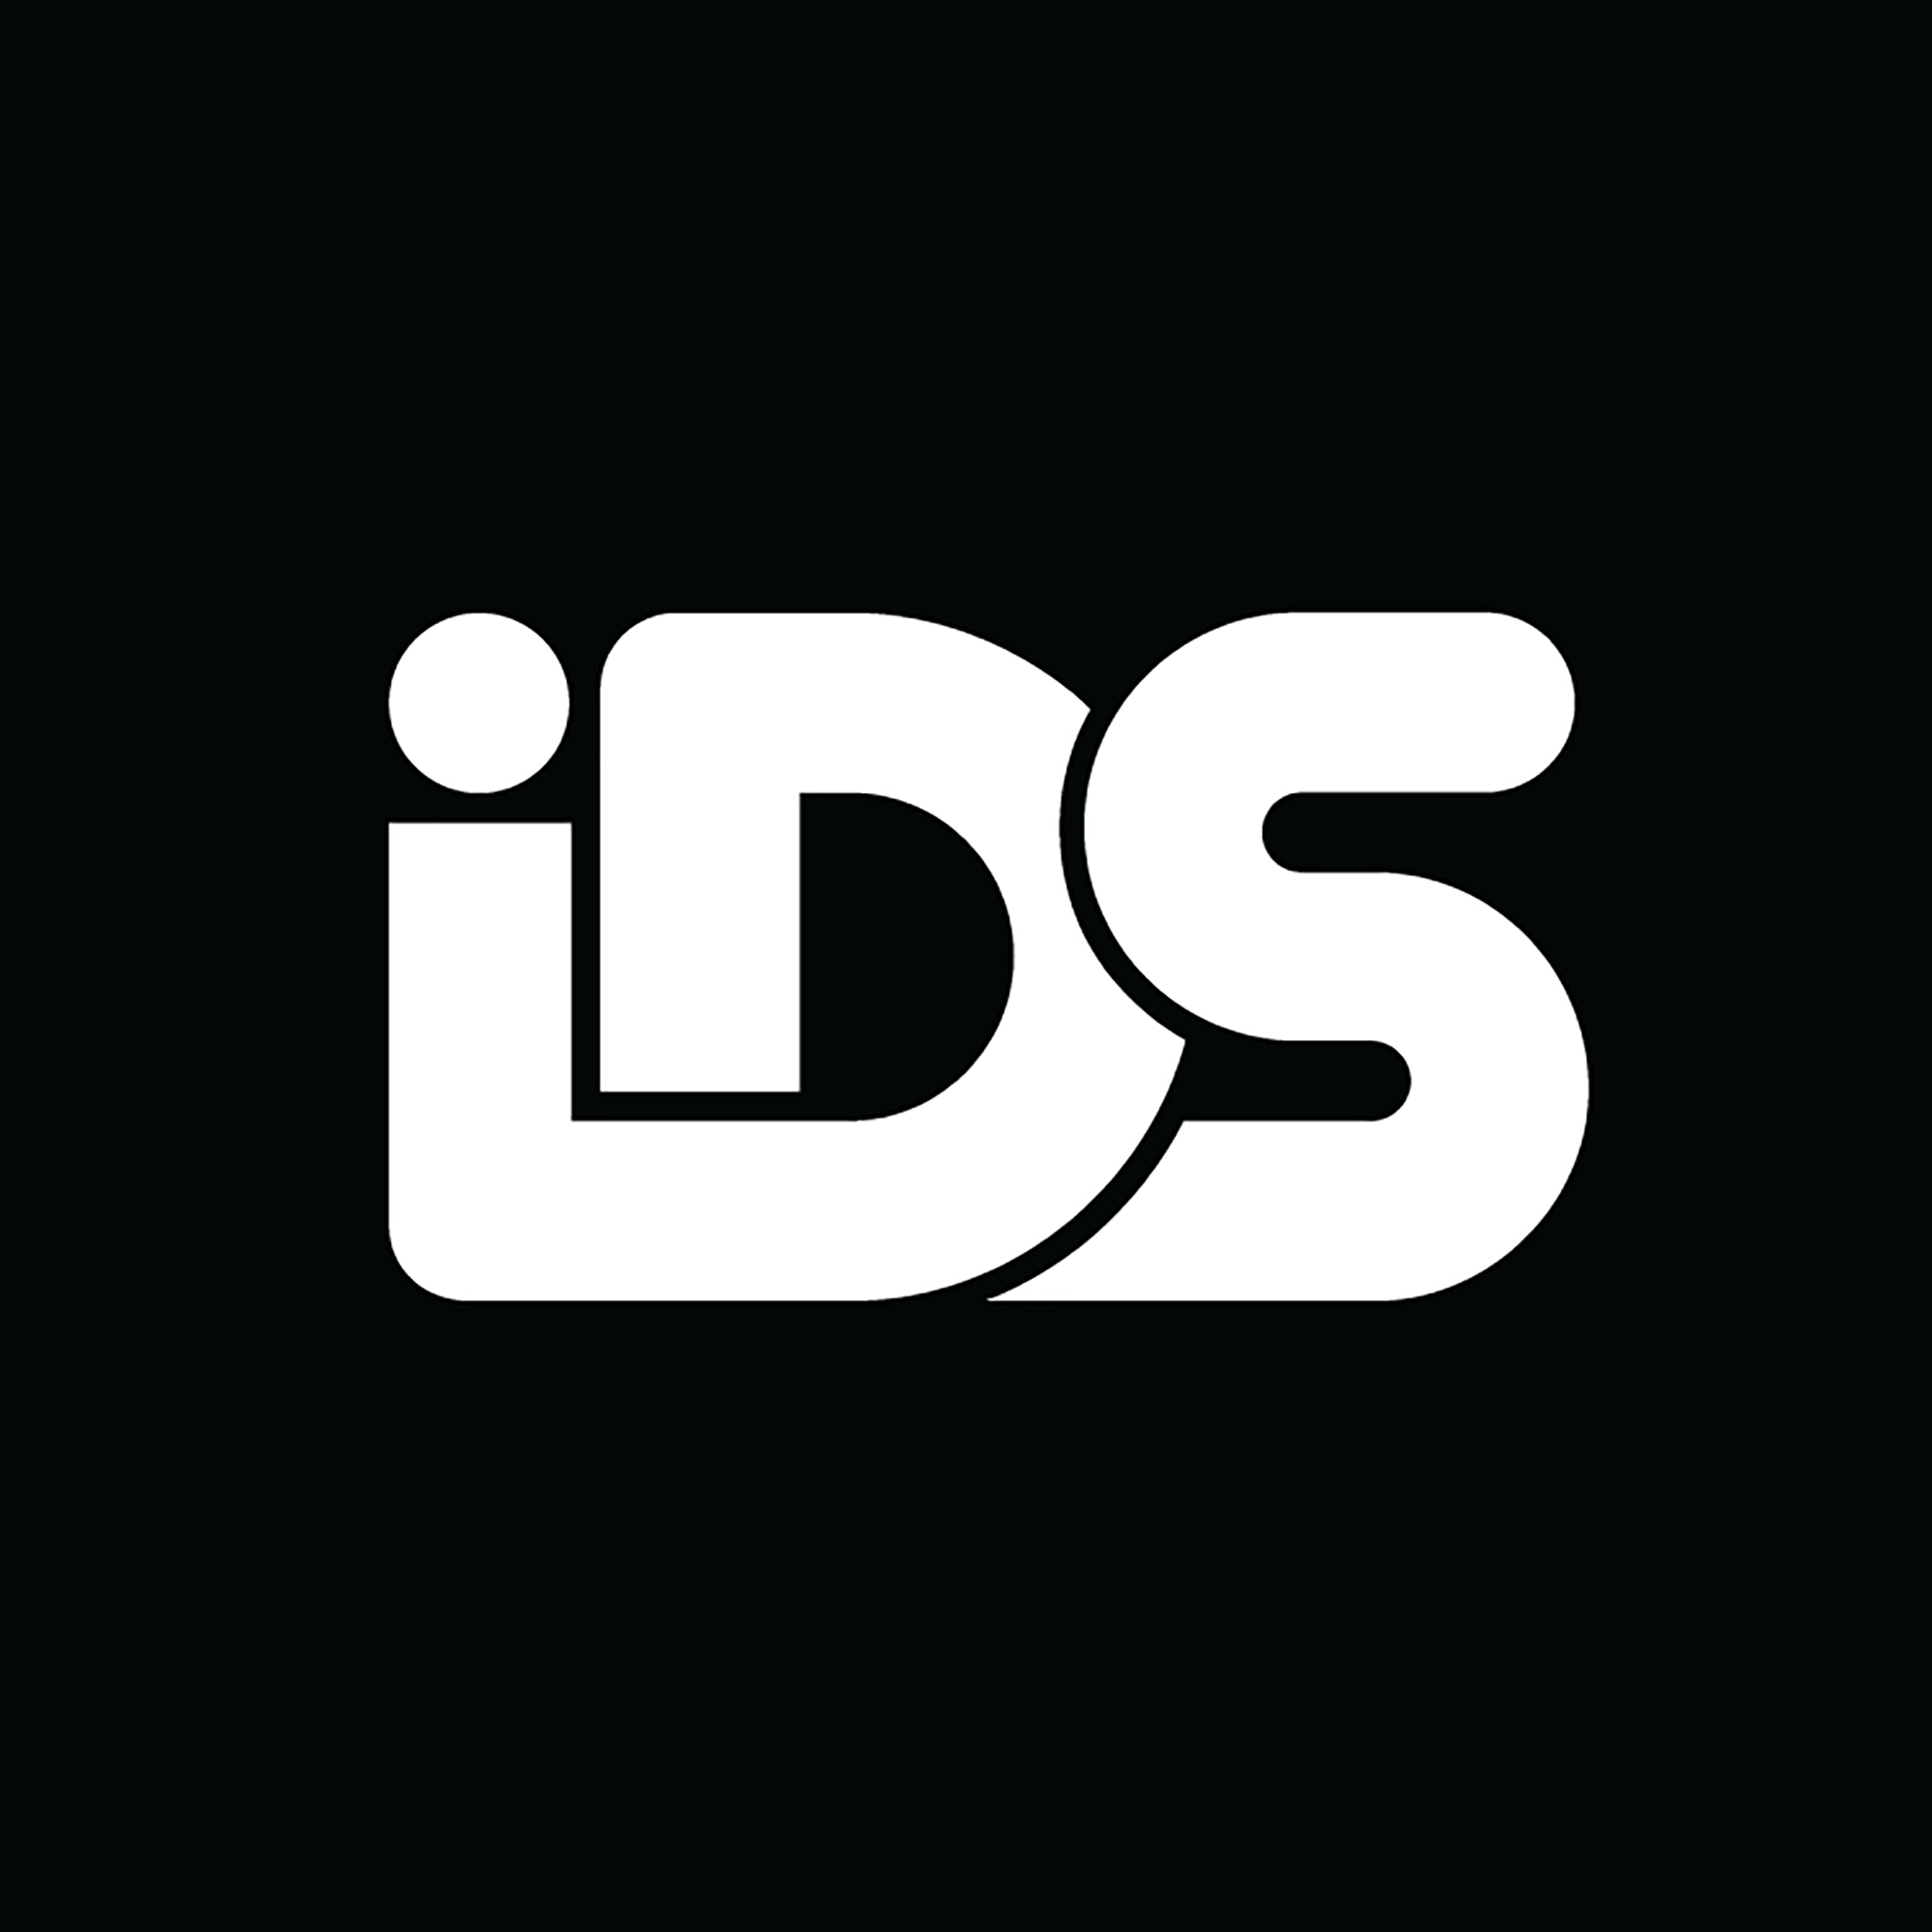 Inspection Data Systems logo branding identity design by Maximillian Piras